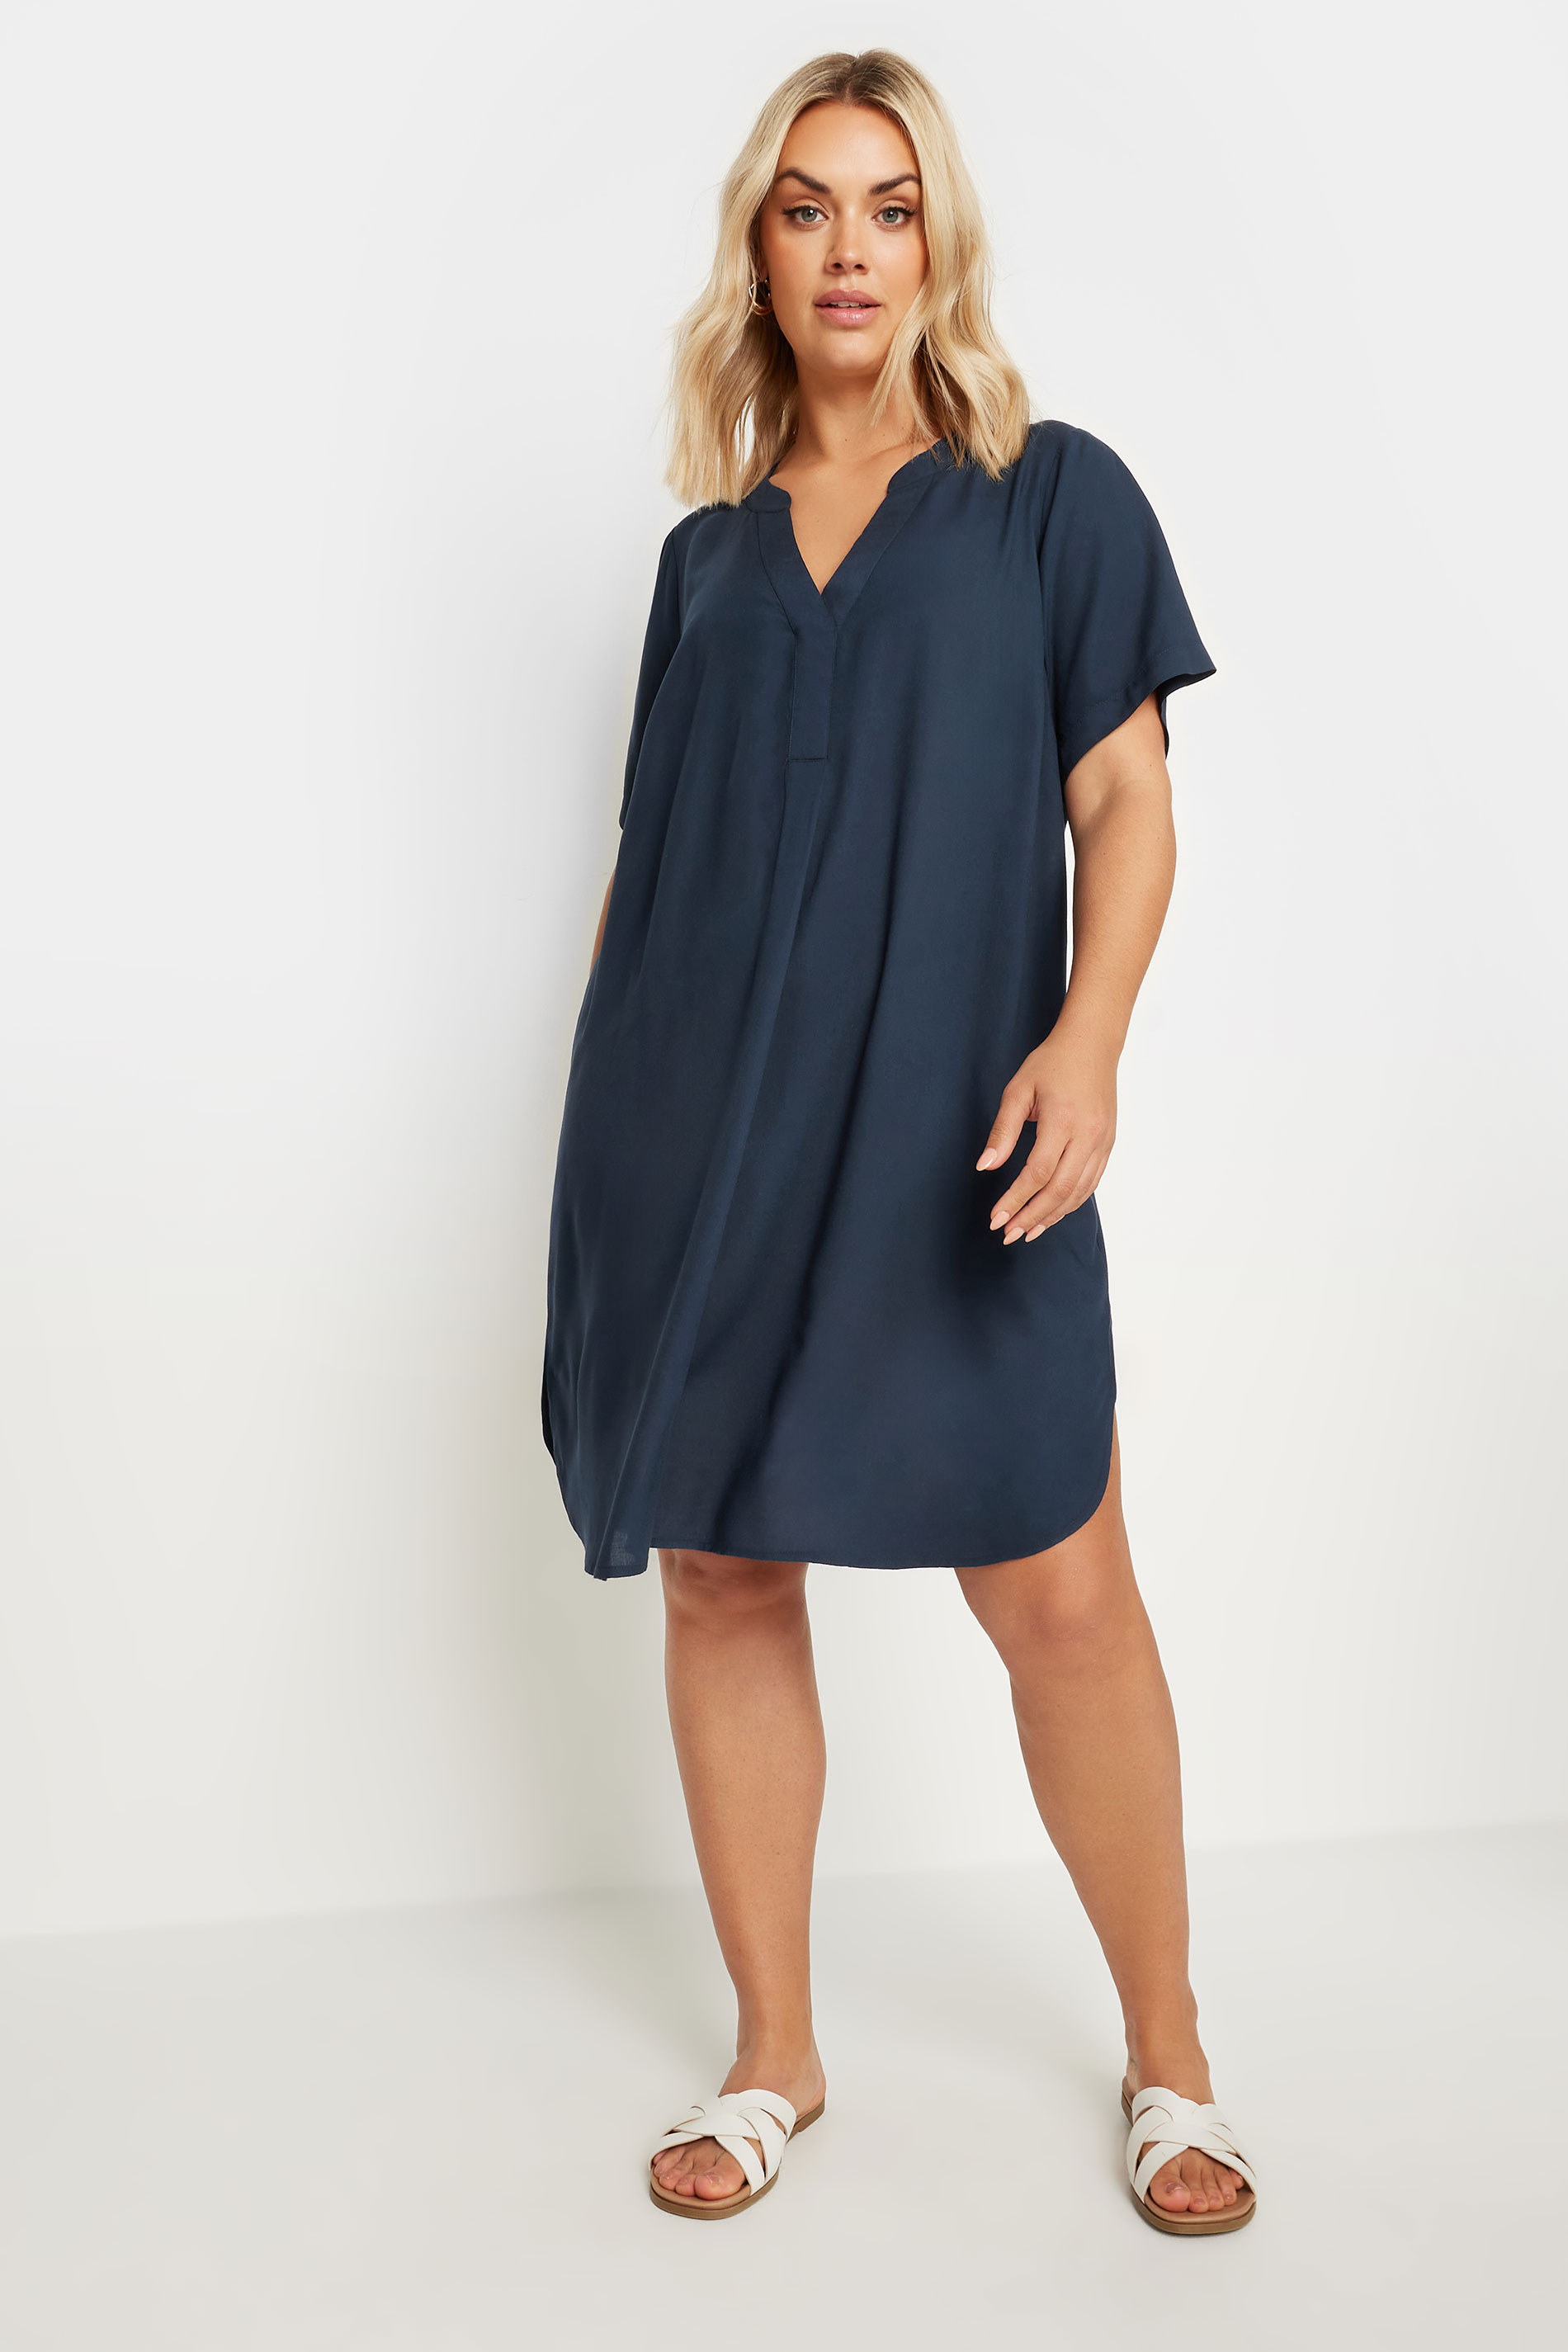 YOURS Plus Size Navy Blue Short Sleeve Tunic Dress | Yours Clothing 2